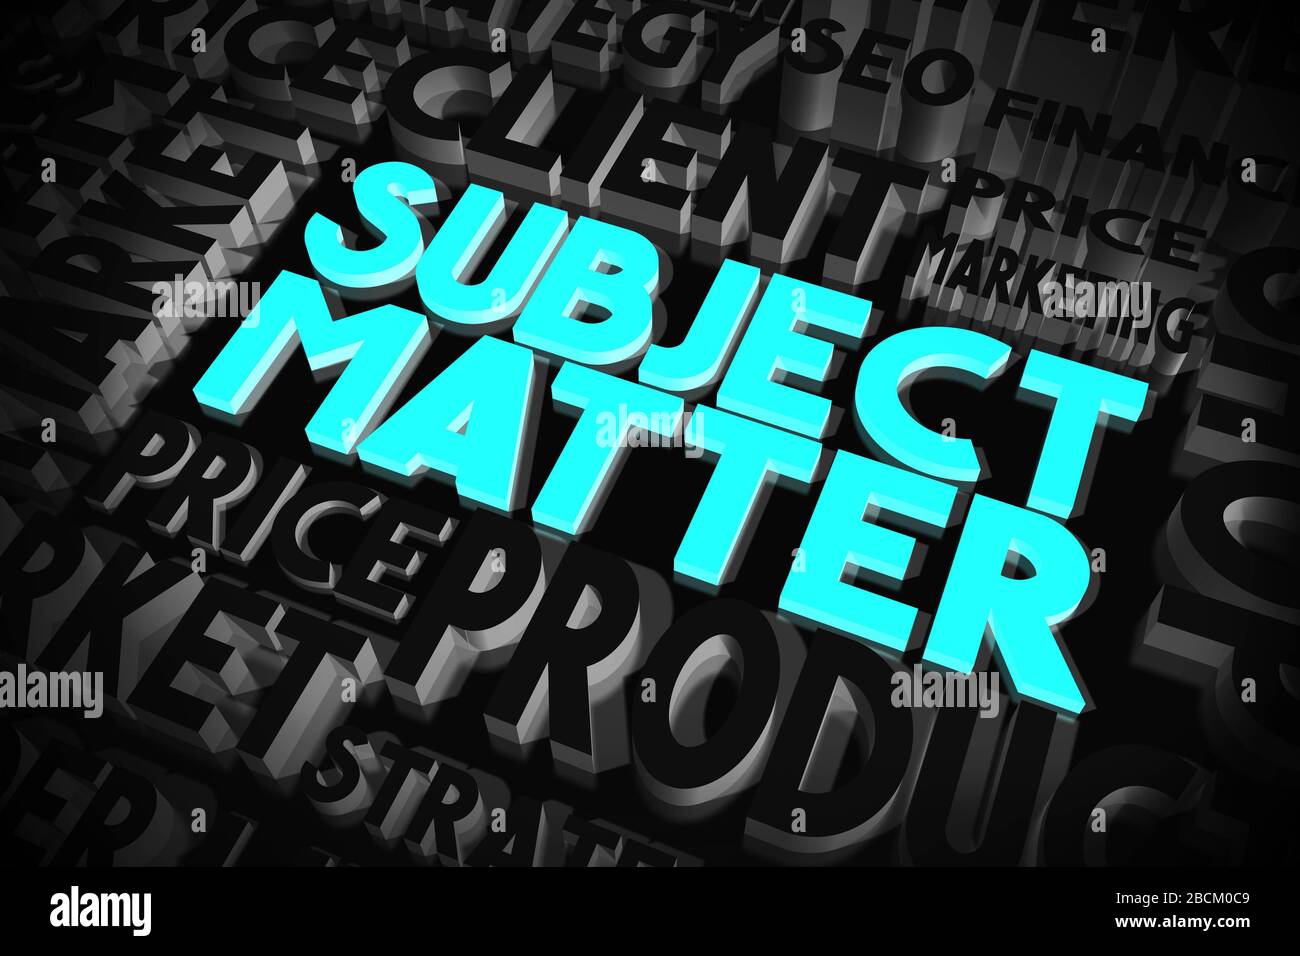 Subject matter. Subject-matter jurisdiction.